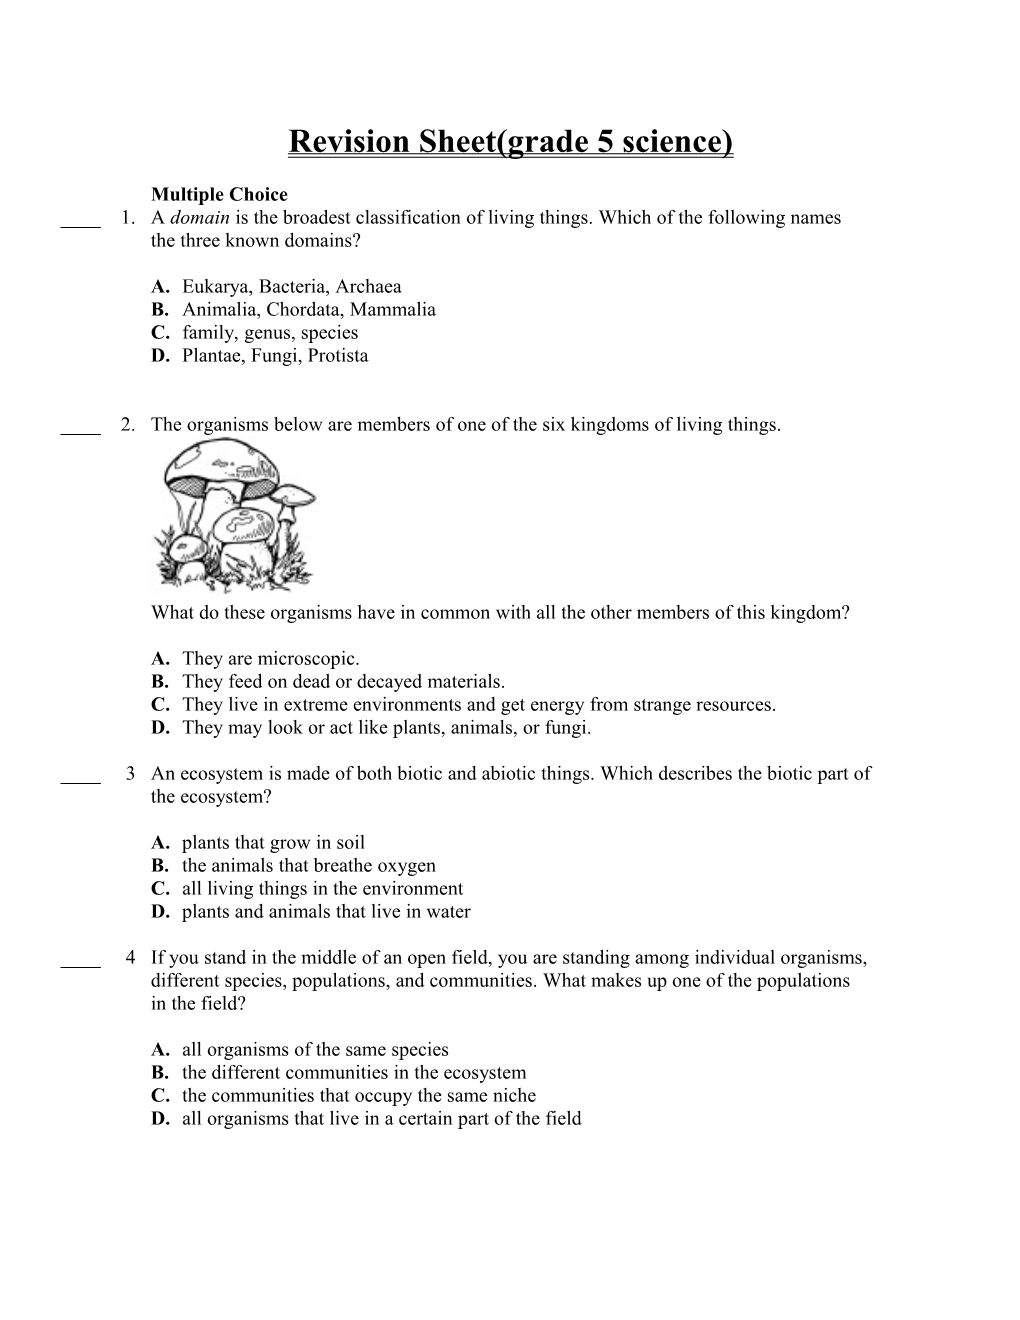 Revision Sheet(Grade 5 Science)